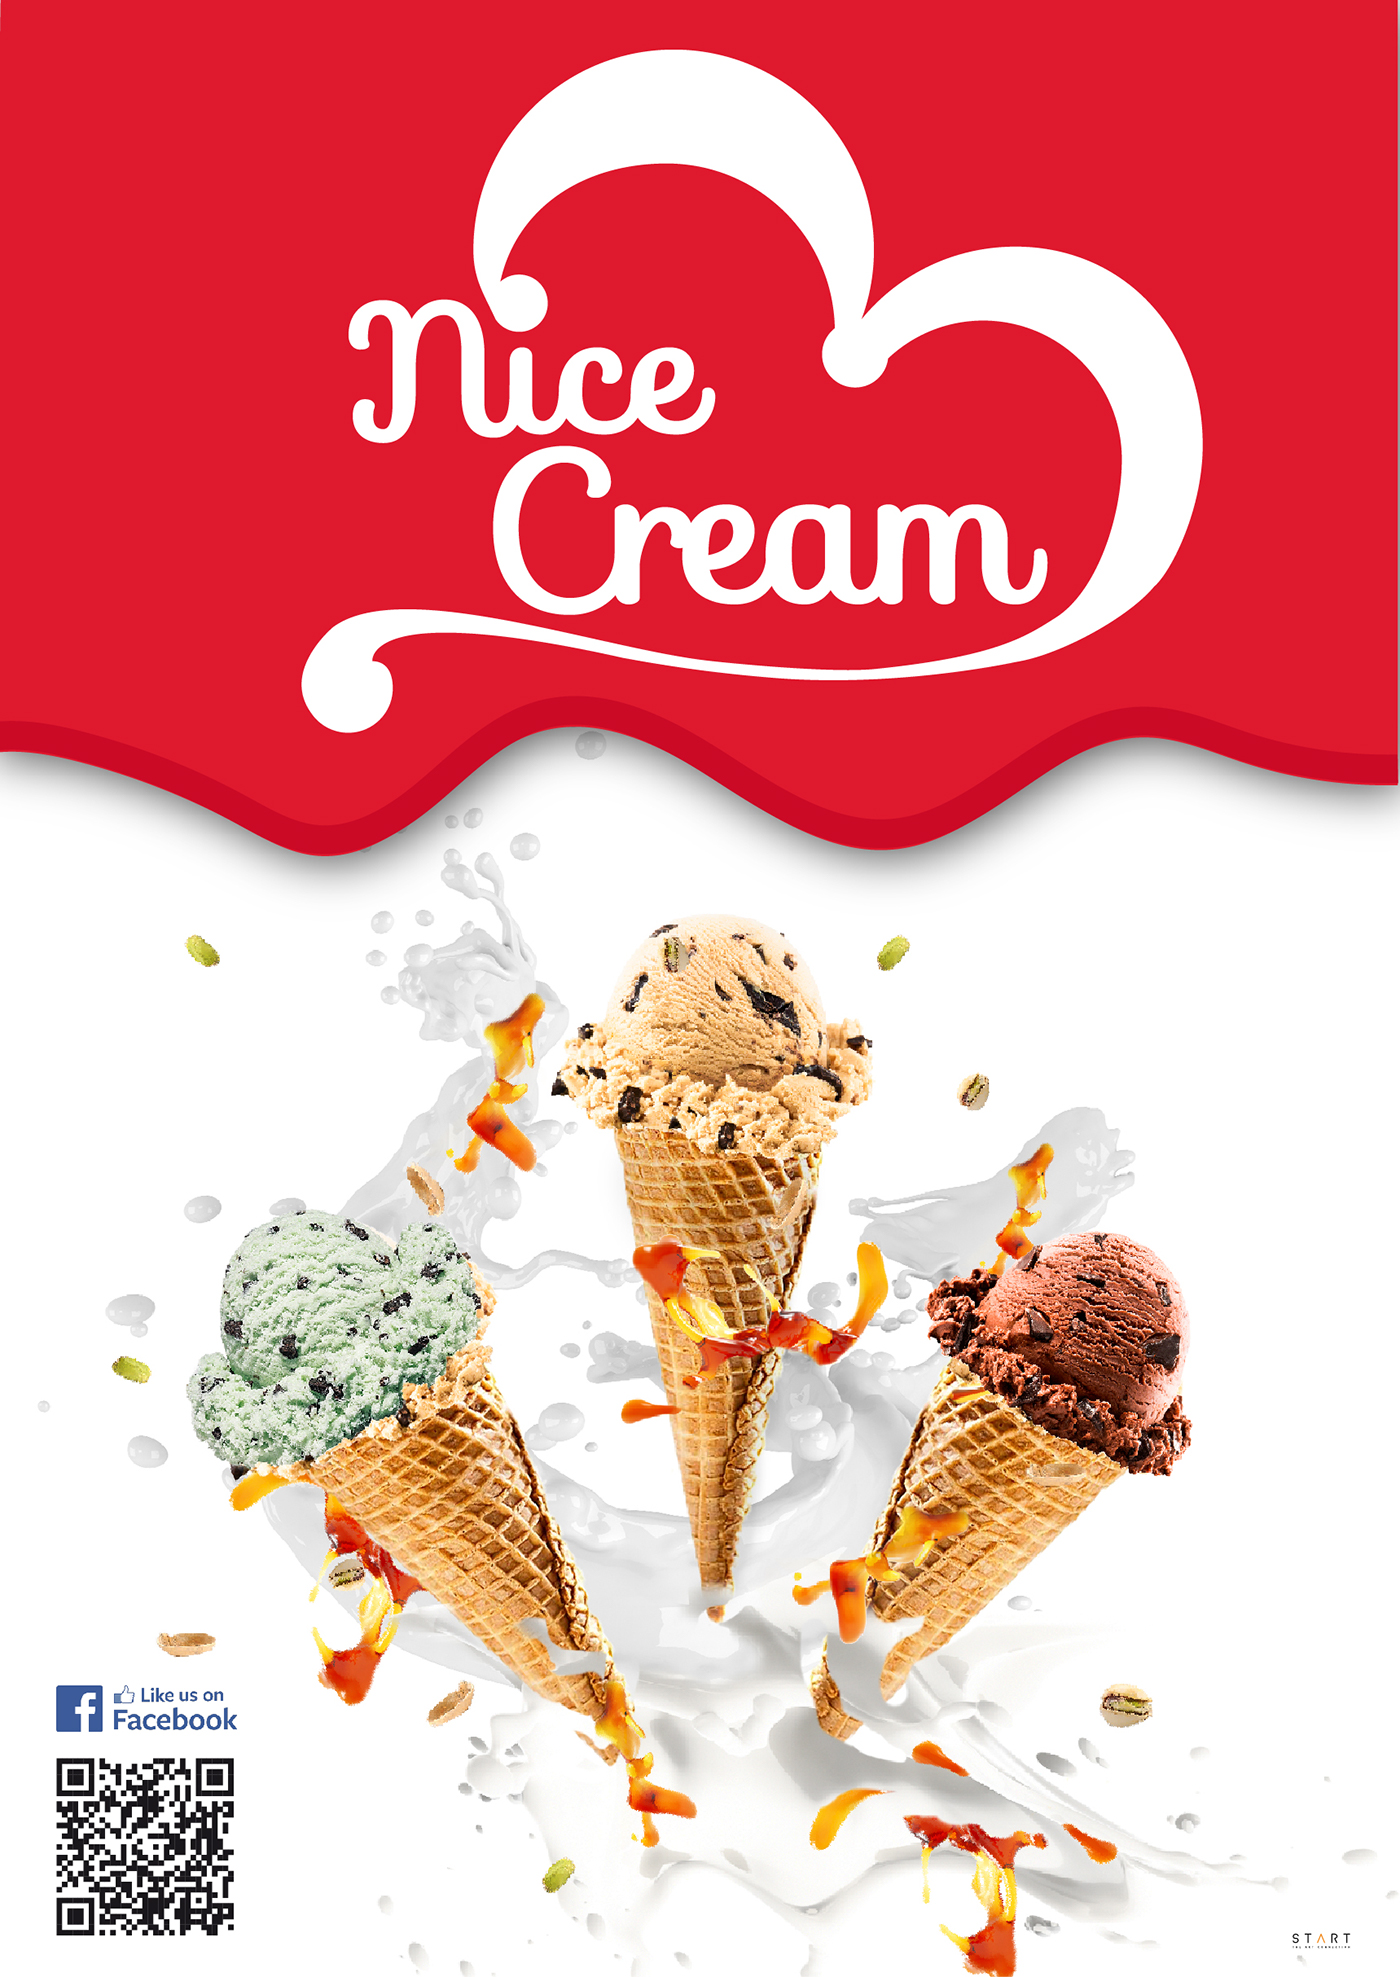 photoshop ice cream poster art design N'ice Cream new